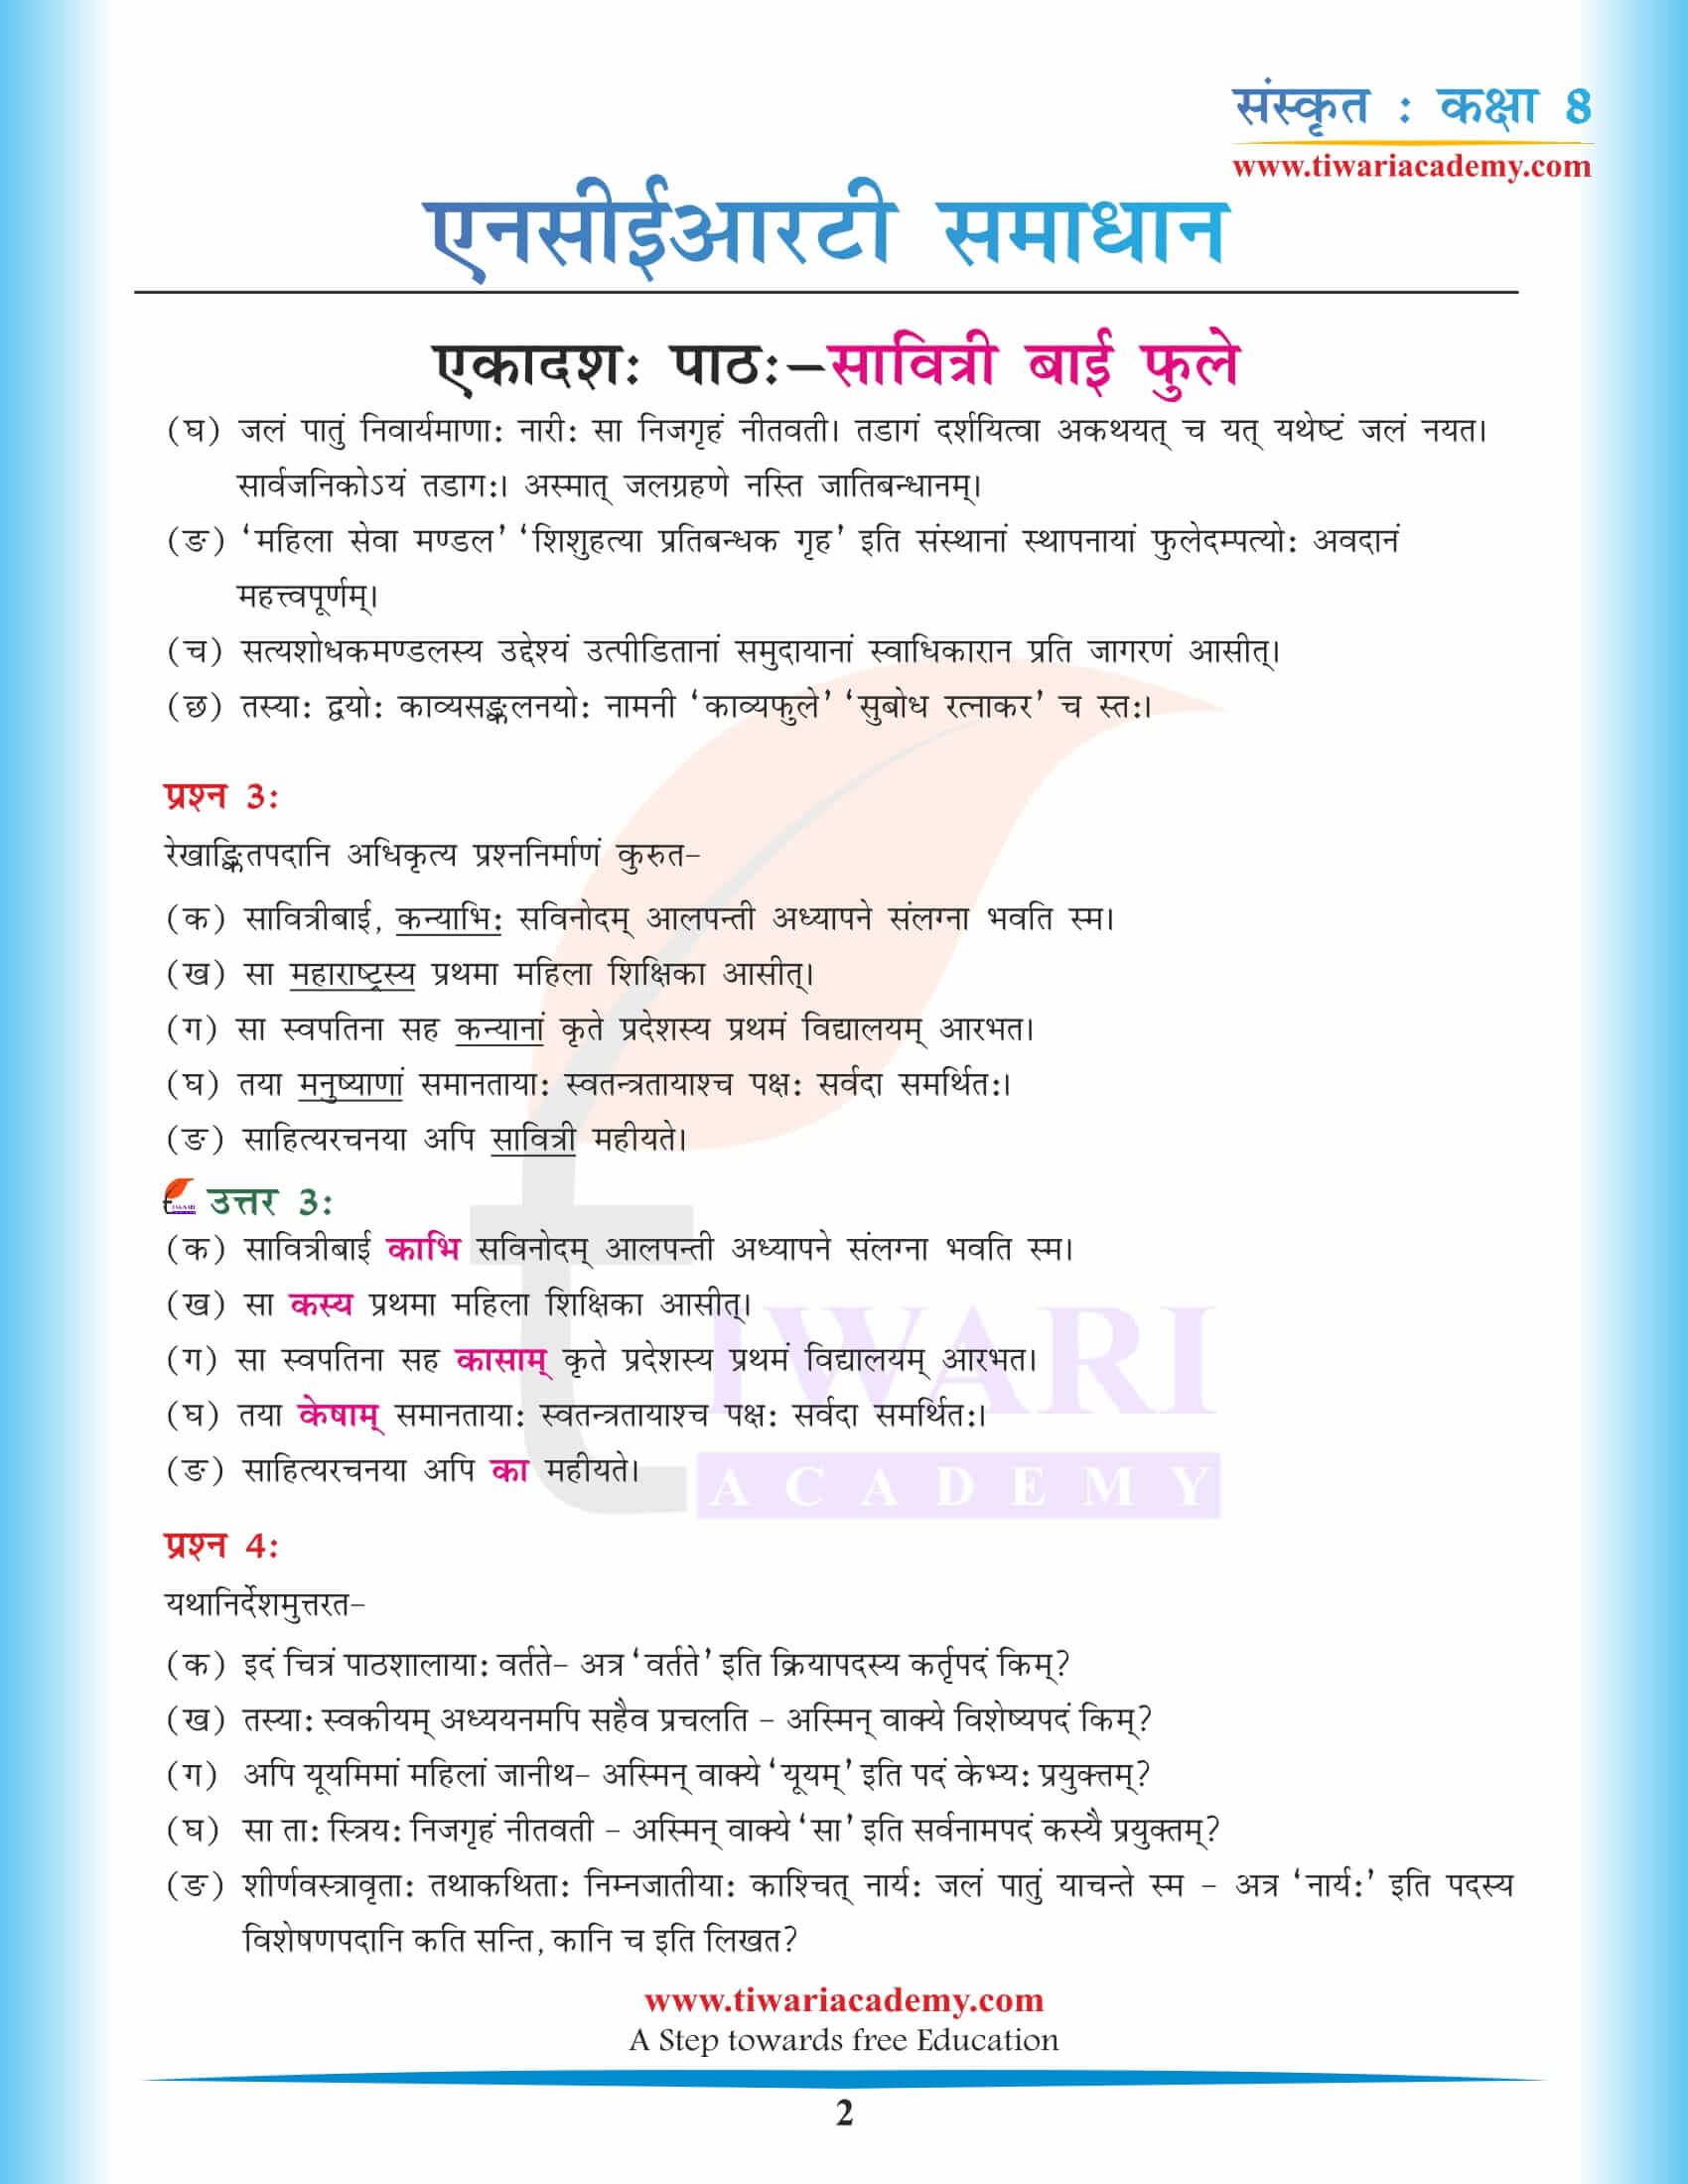 कक्षा 8 संस्कृत अध्याय 11 एनसीईआरटी के उत्तर